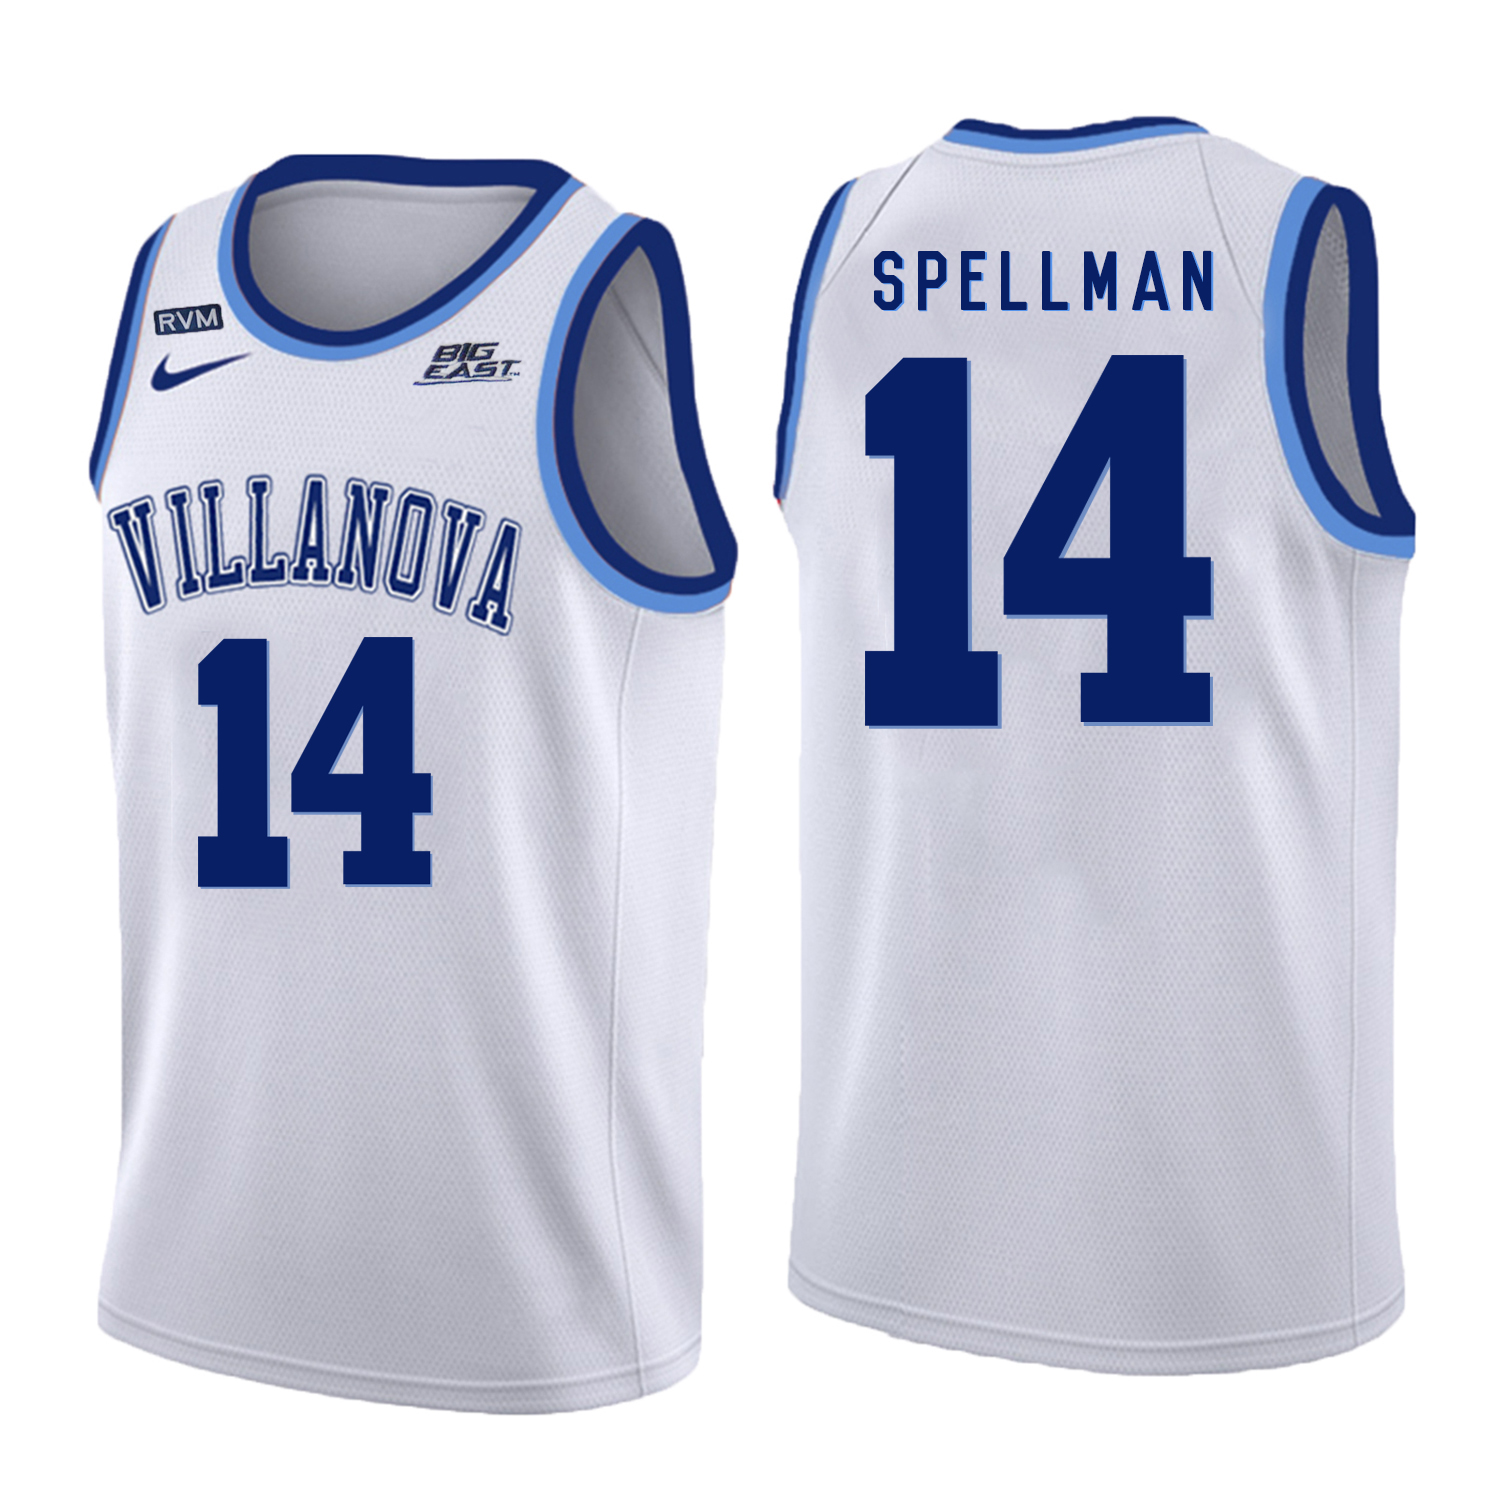 Villanova Wildcats 14 Omari Spellman White College Basketball Jersey